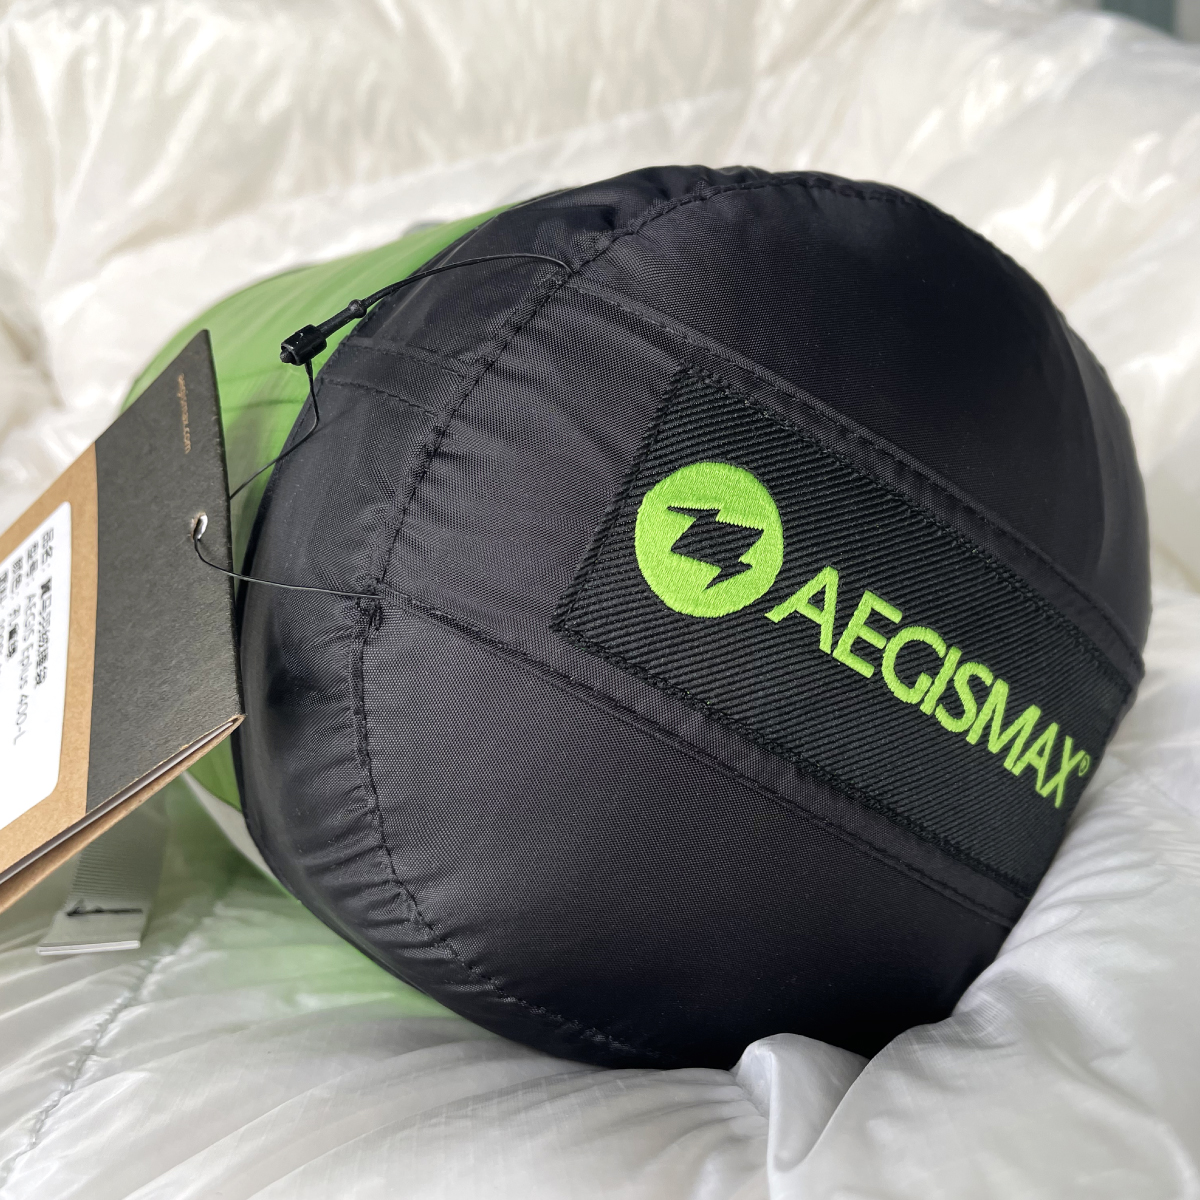 AegisMax Compression sack for Sleeping bag storage